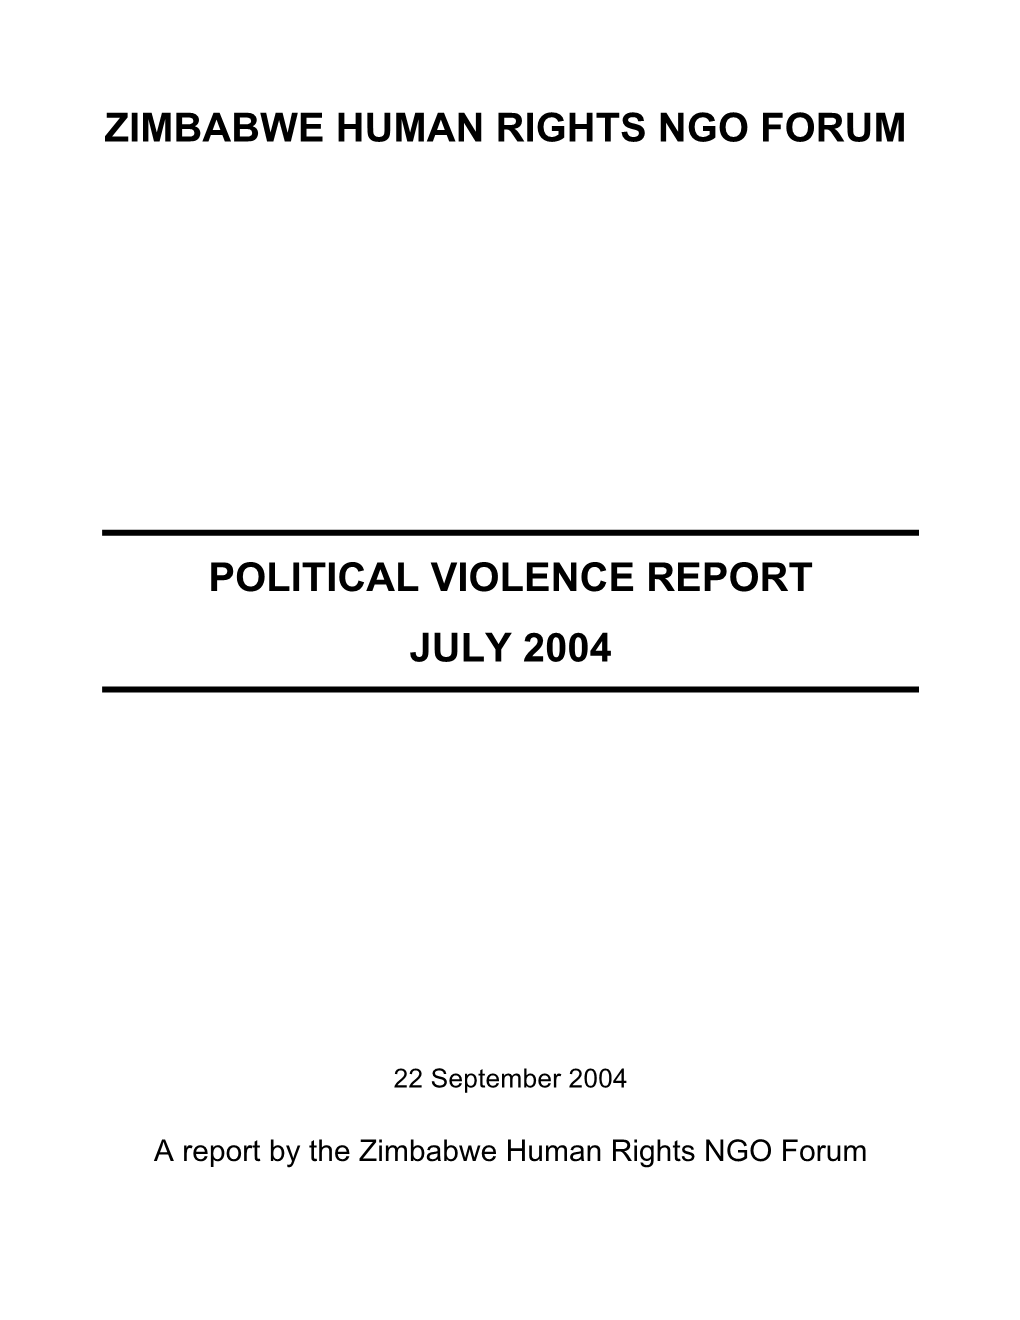 Zimbabwe Human Rights Ngo Forum Political Violence